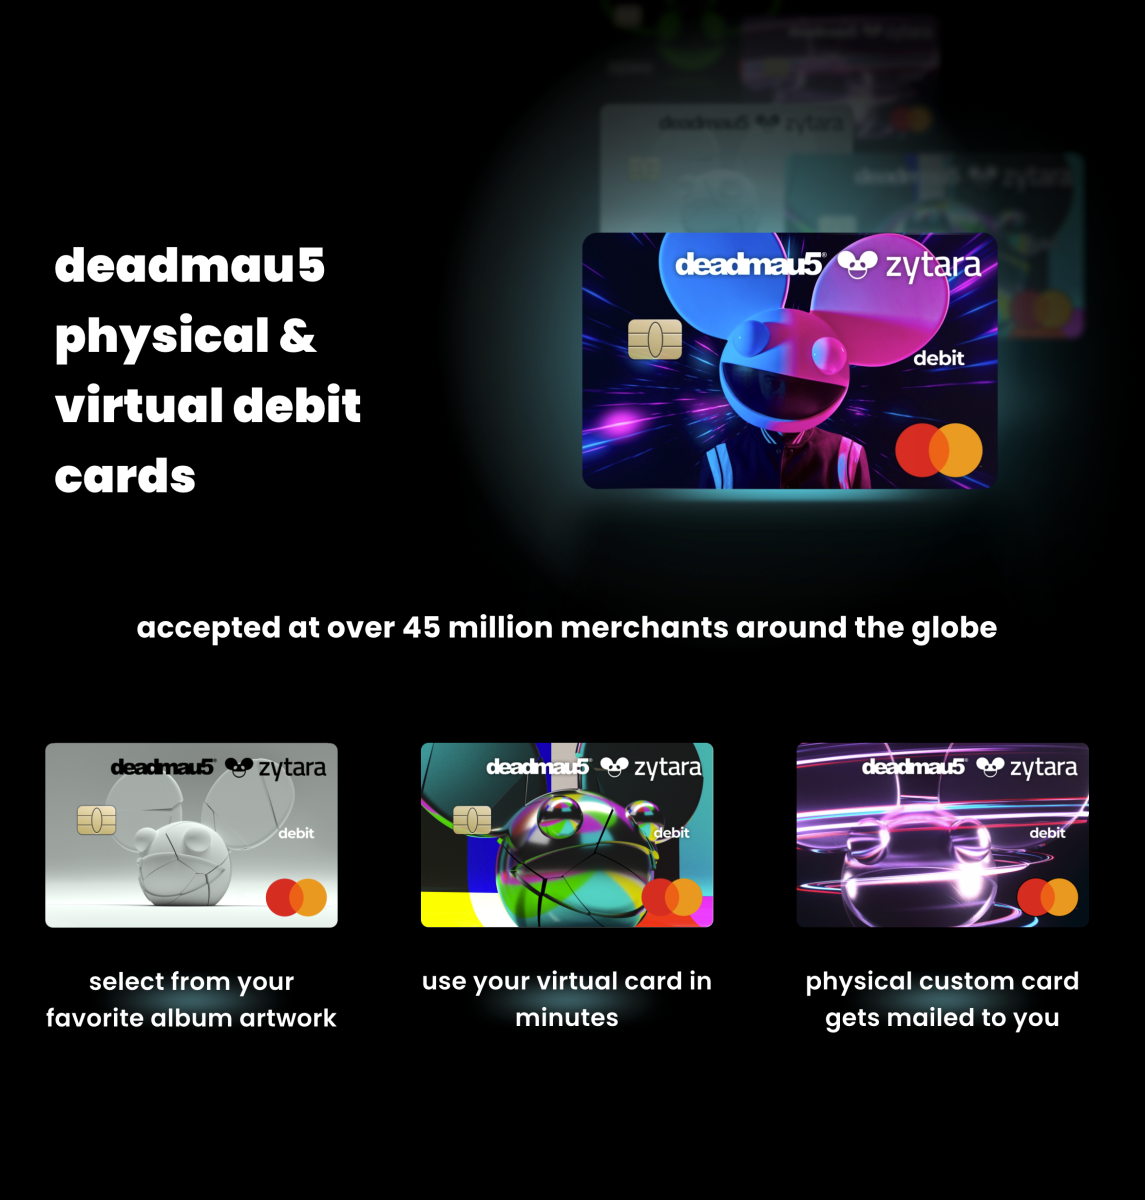 deadmau5 Zytara debit cards